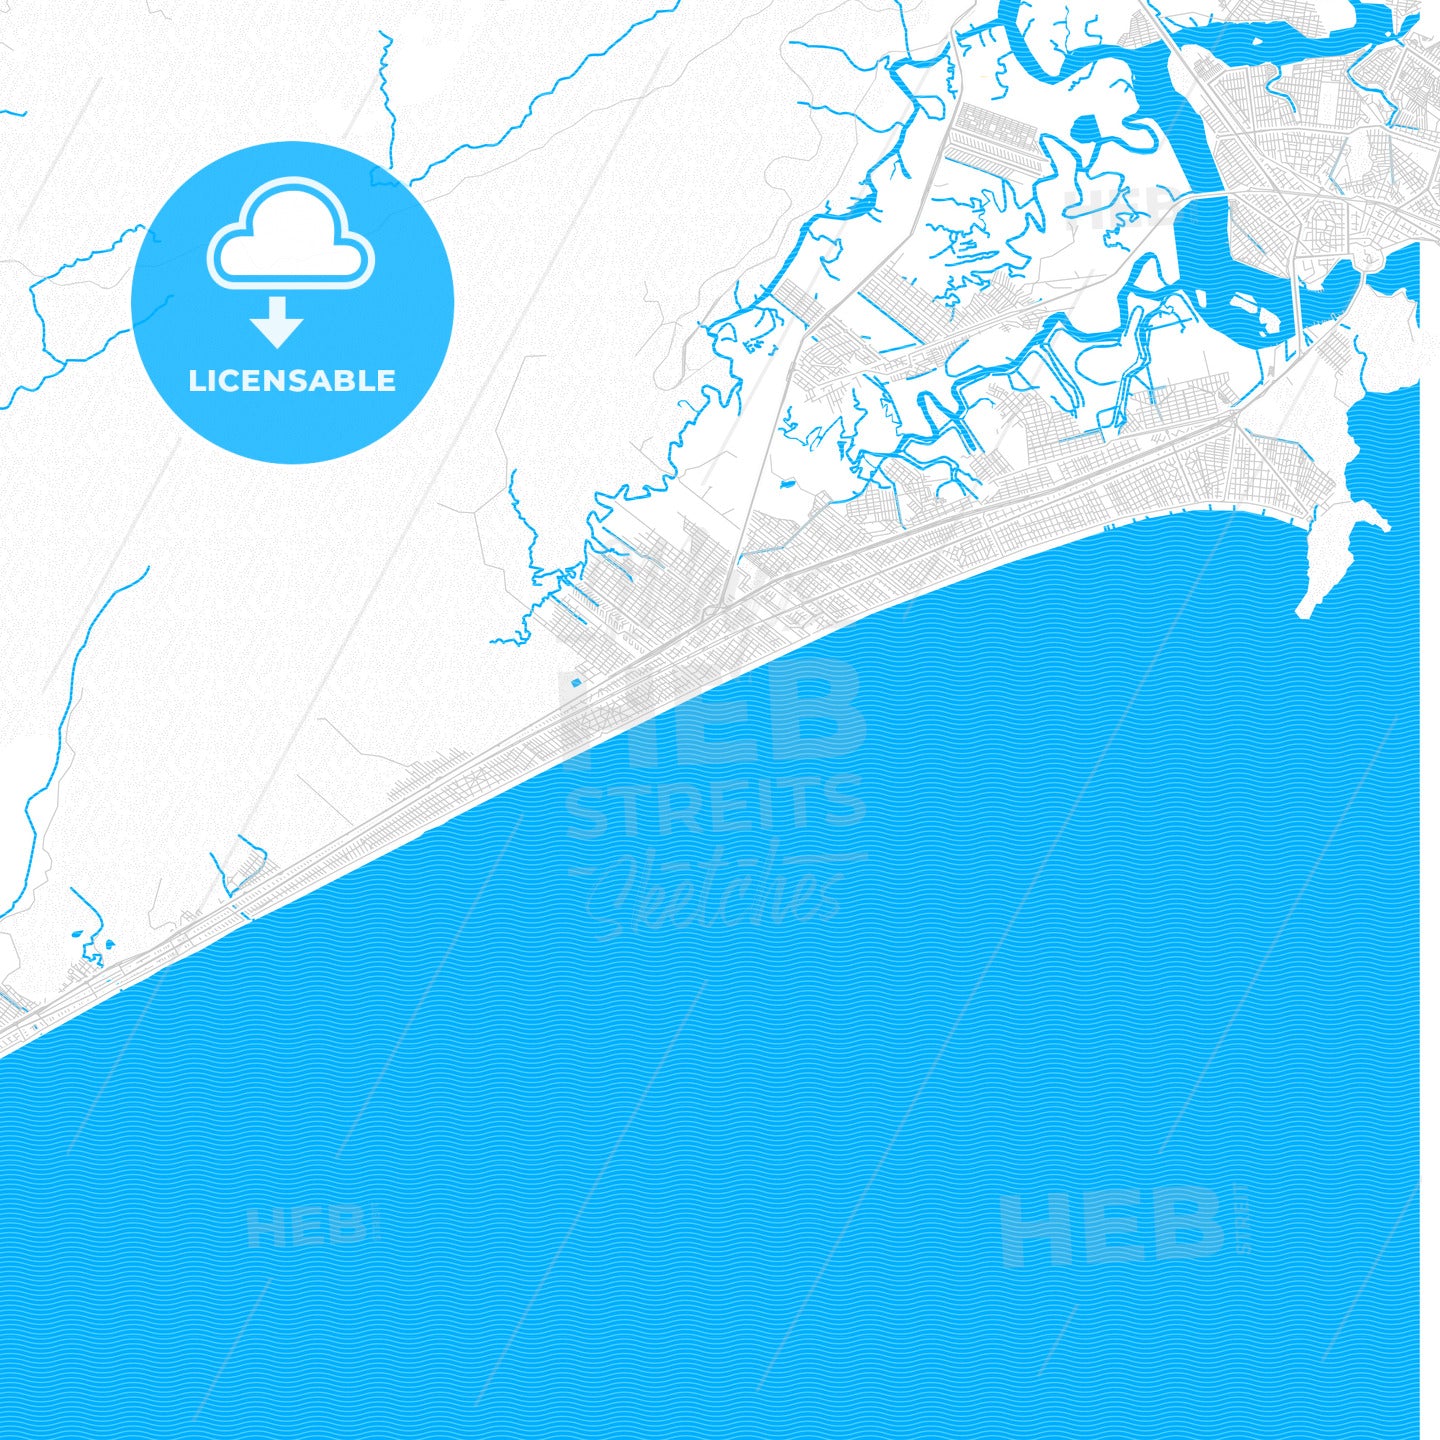 Praia Grande, Brazil PDF vector map with water in focus